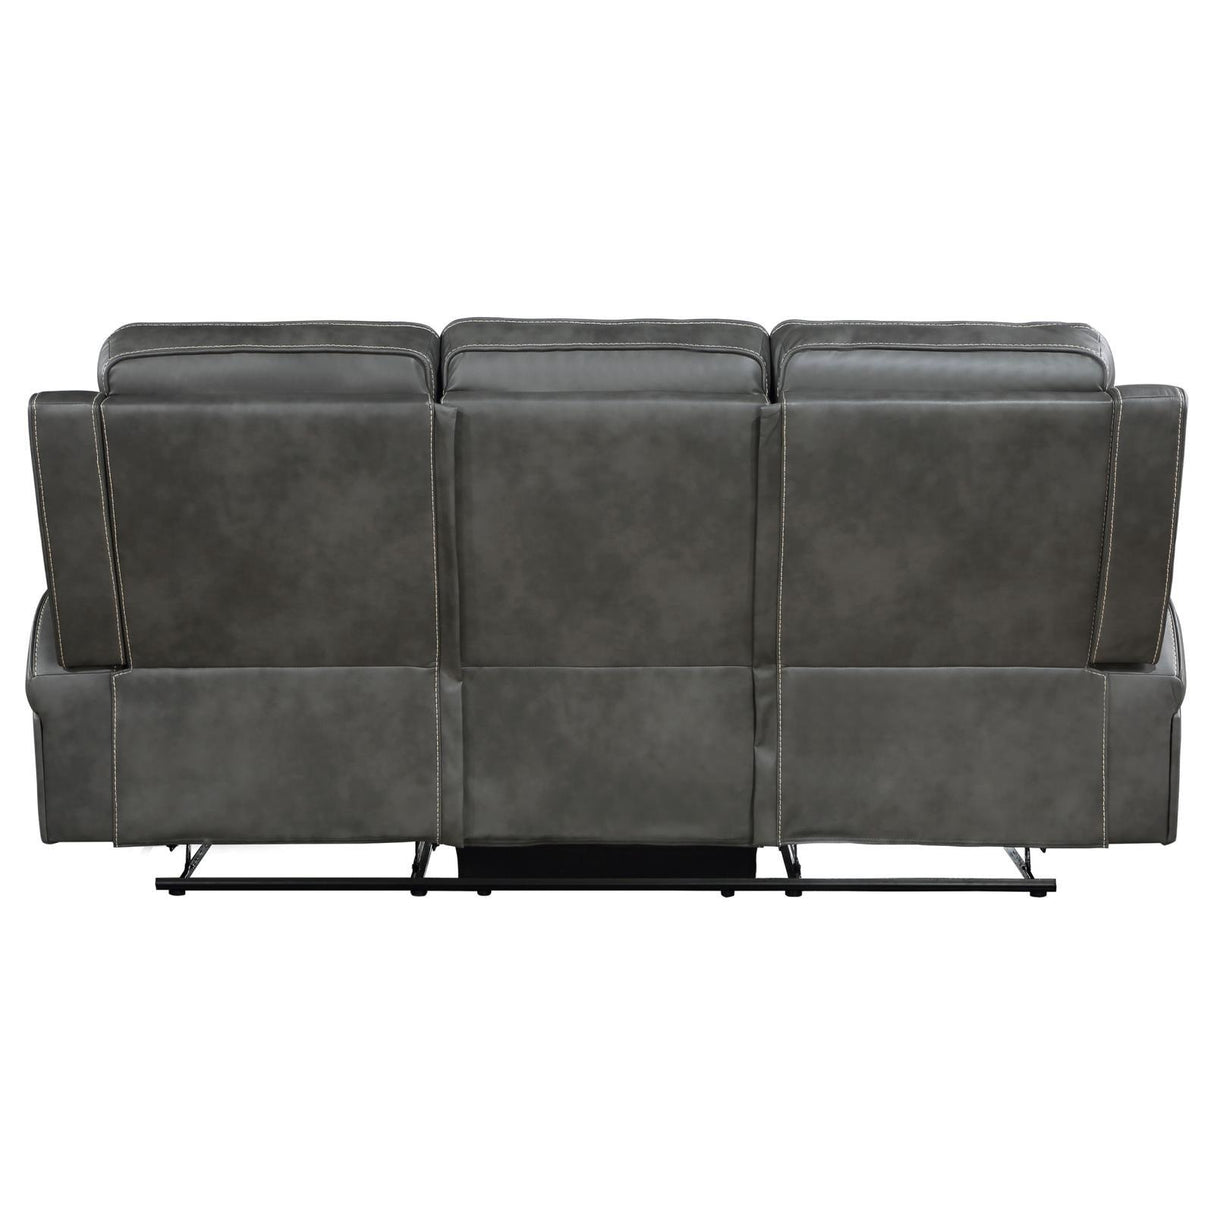 Raelynn Upholstered Motion Reclining Sofa Grey 603191 - Ella Furniture